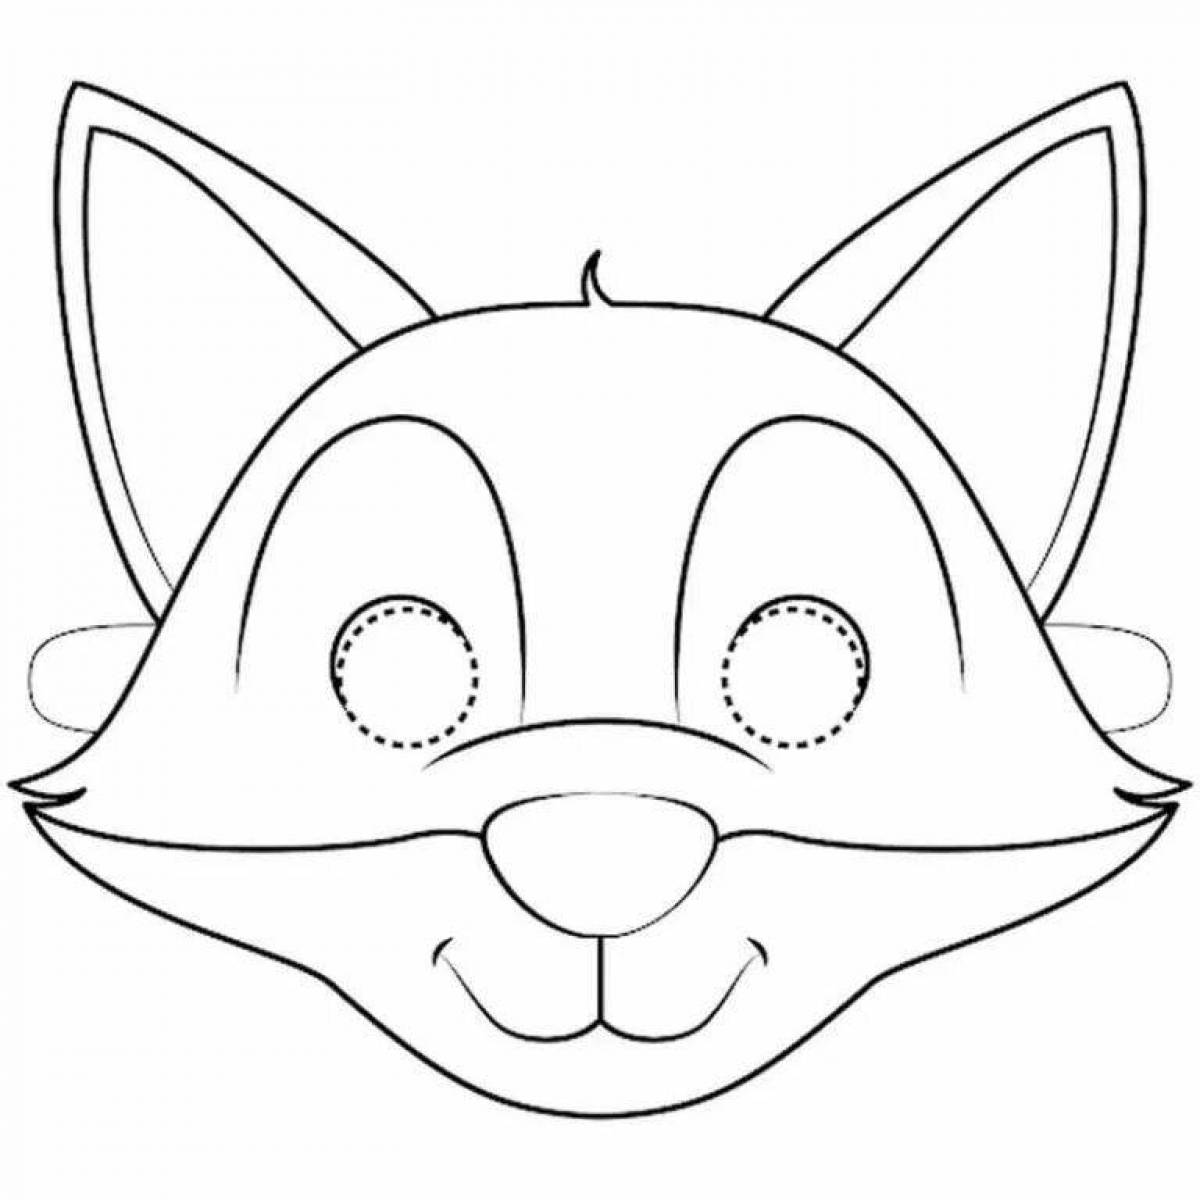 Fox mask #2